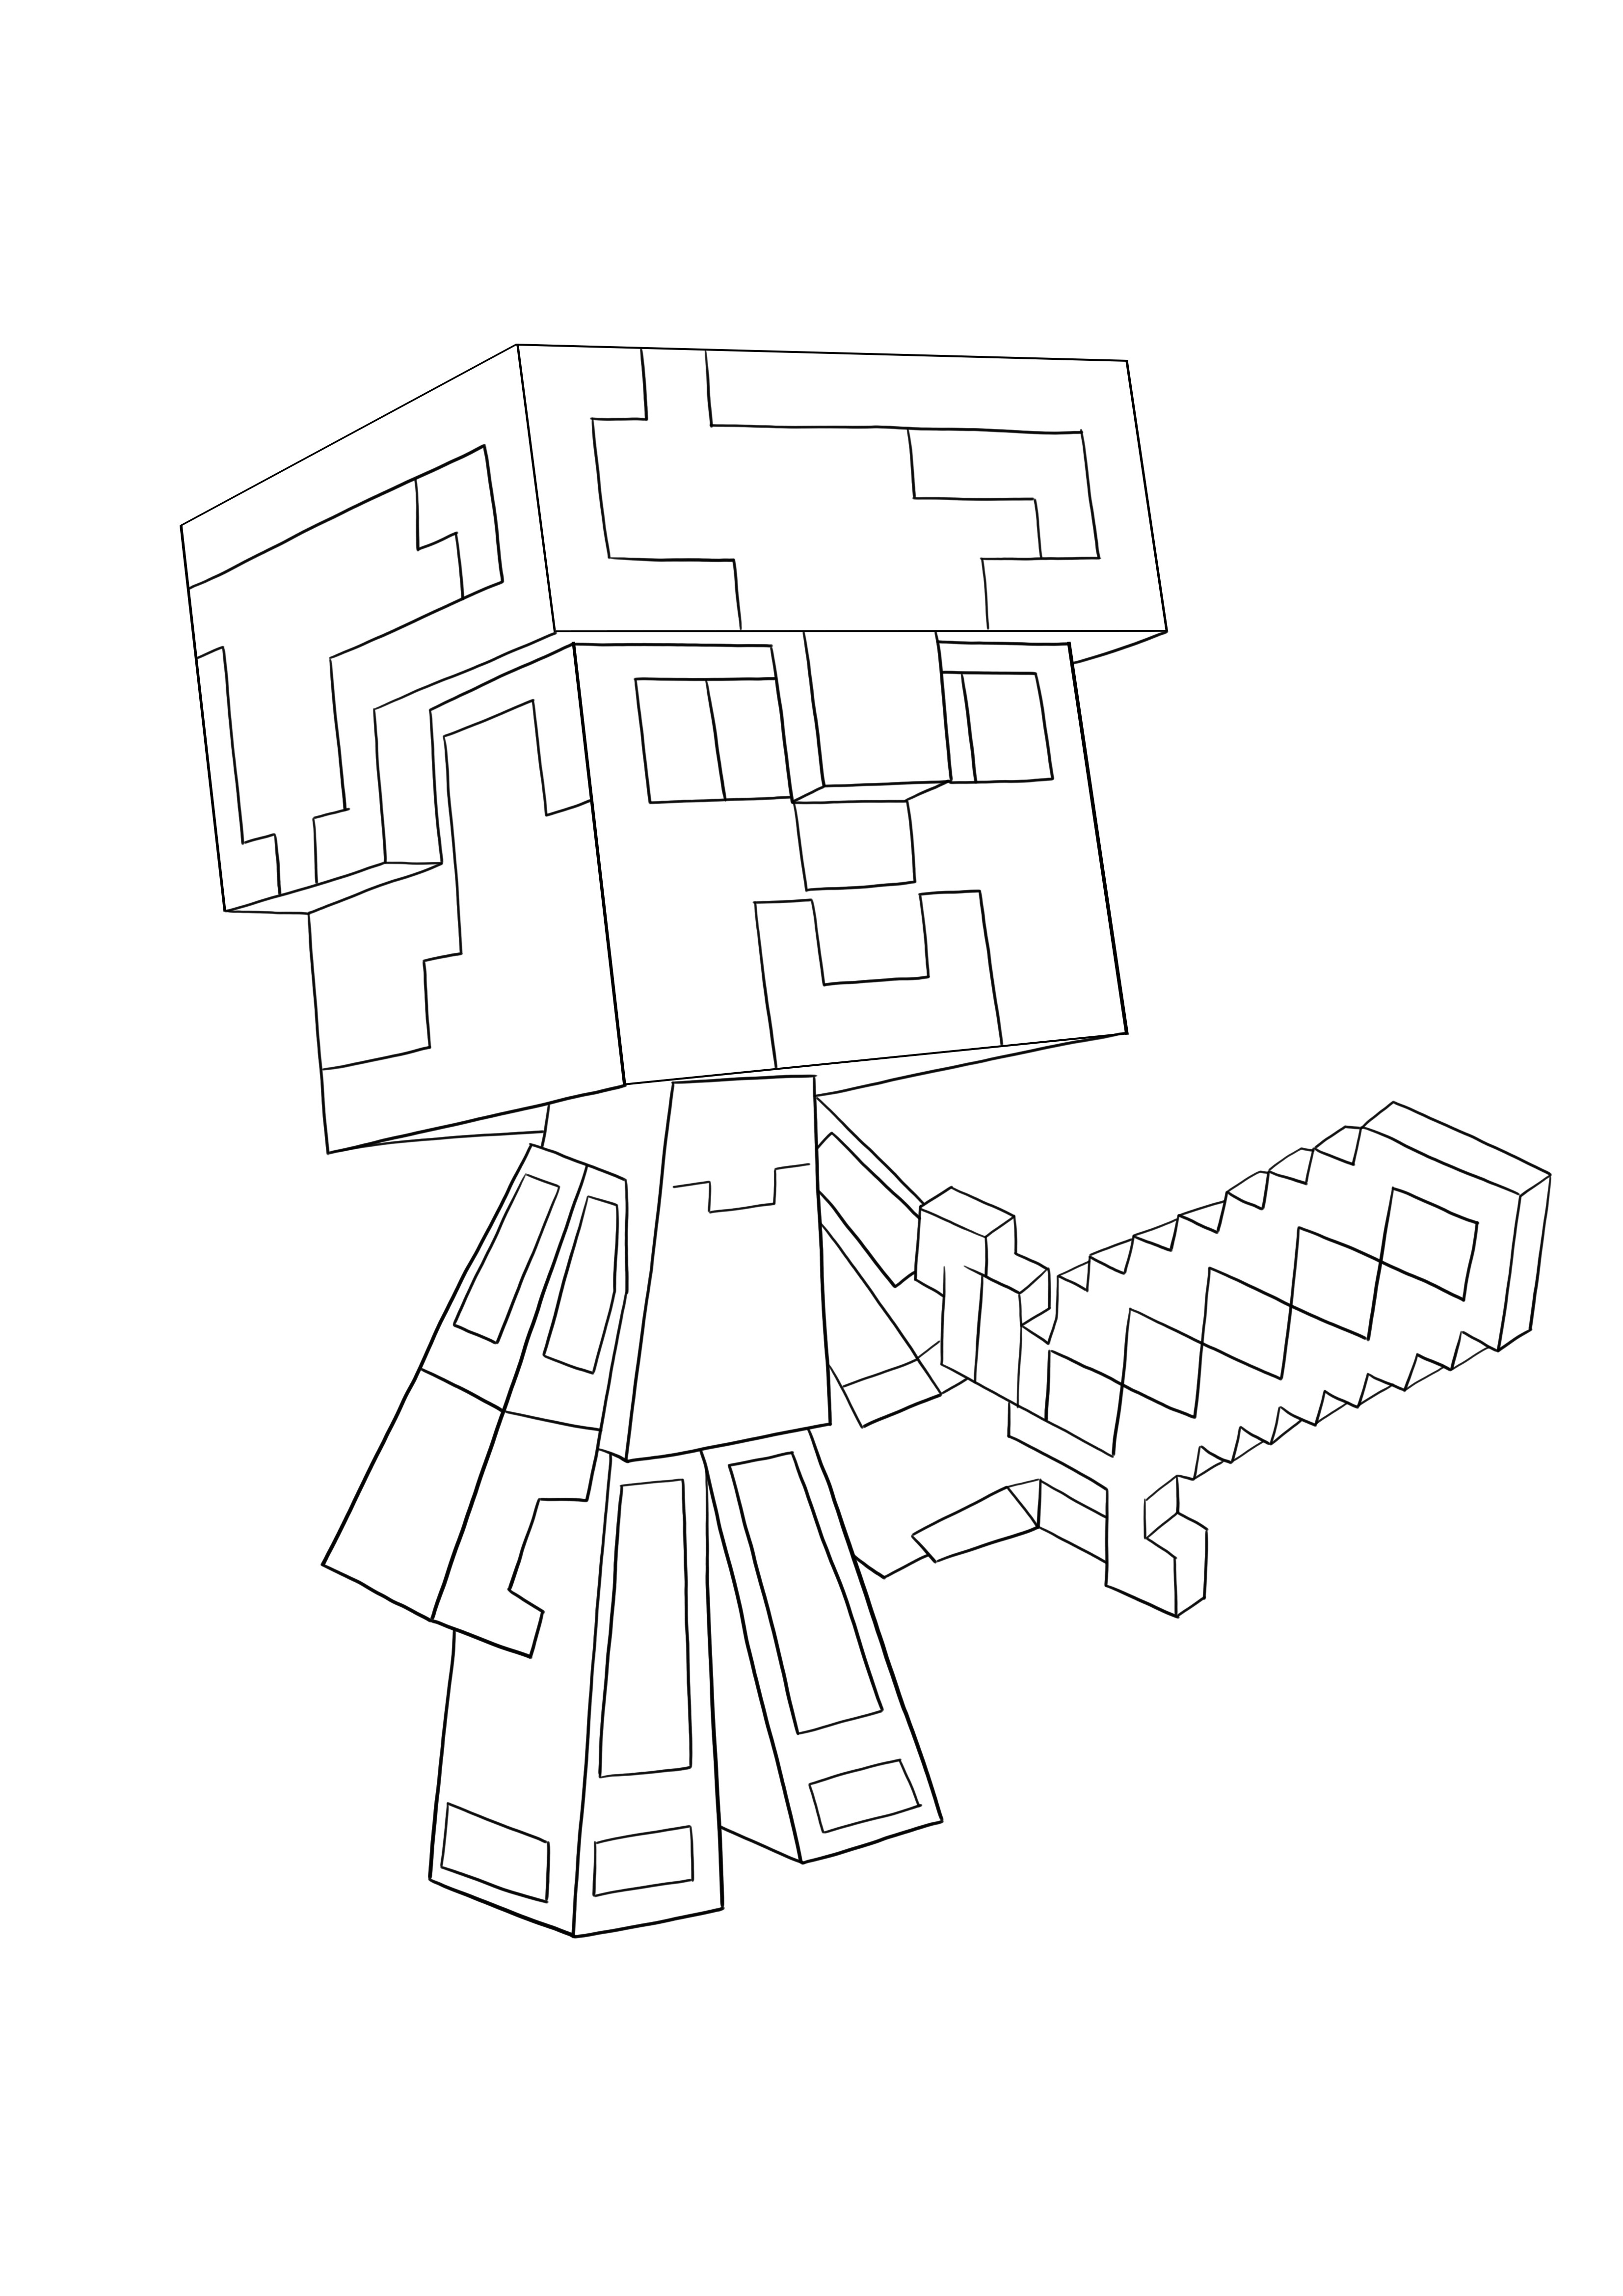 Steve Diamond armor from Minecraft free printable